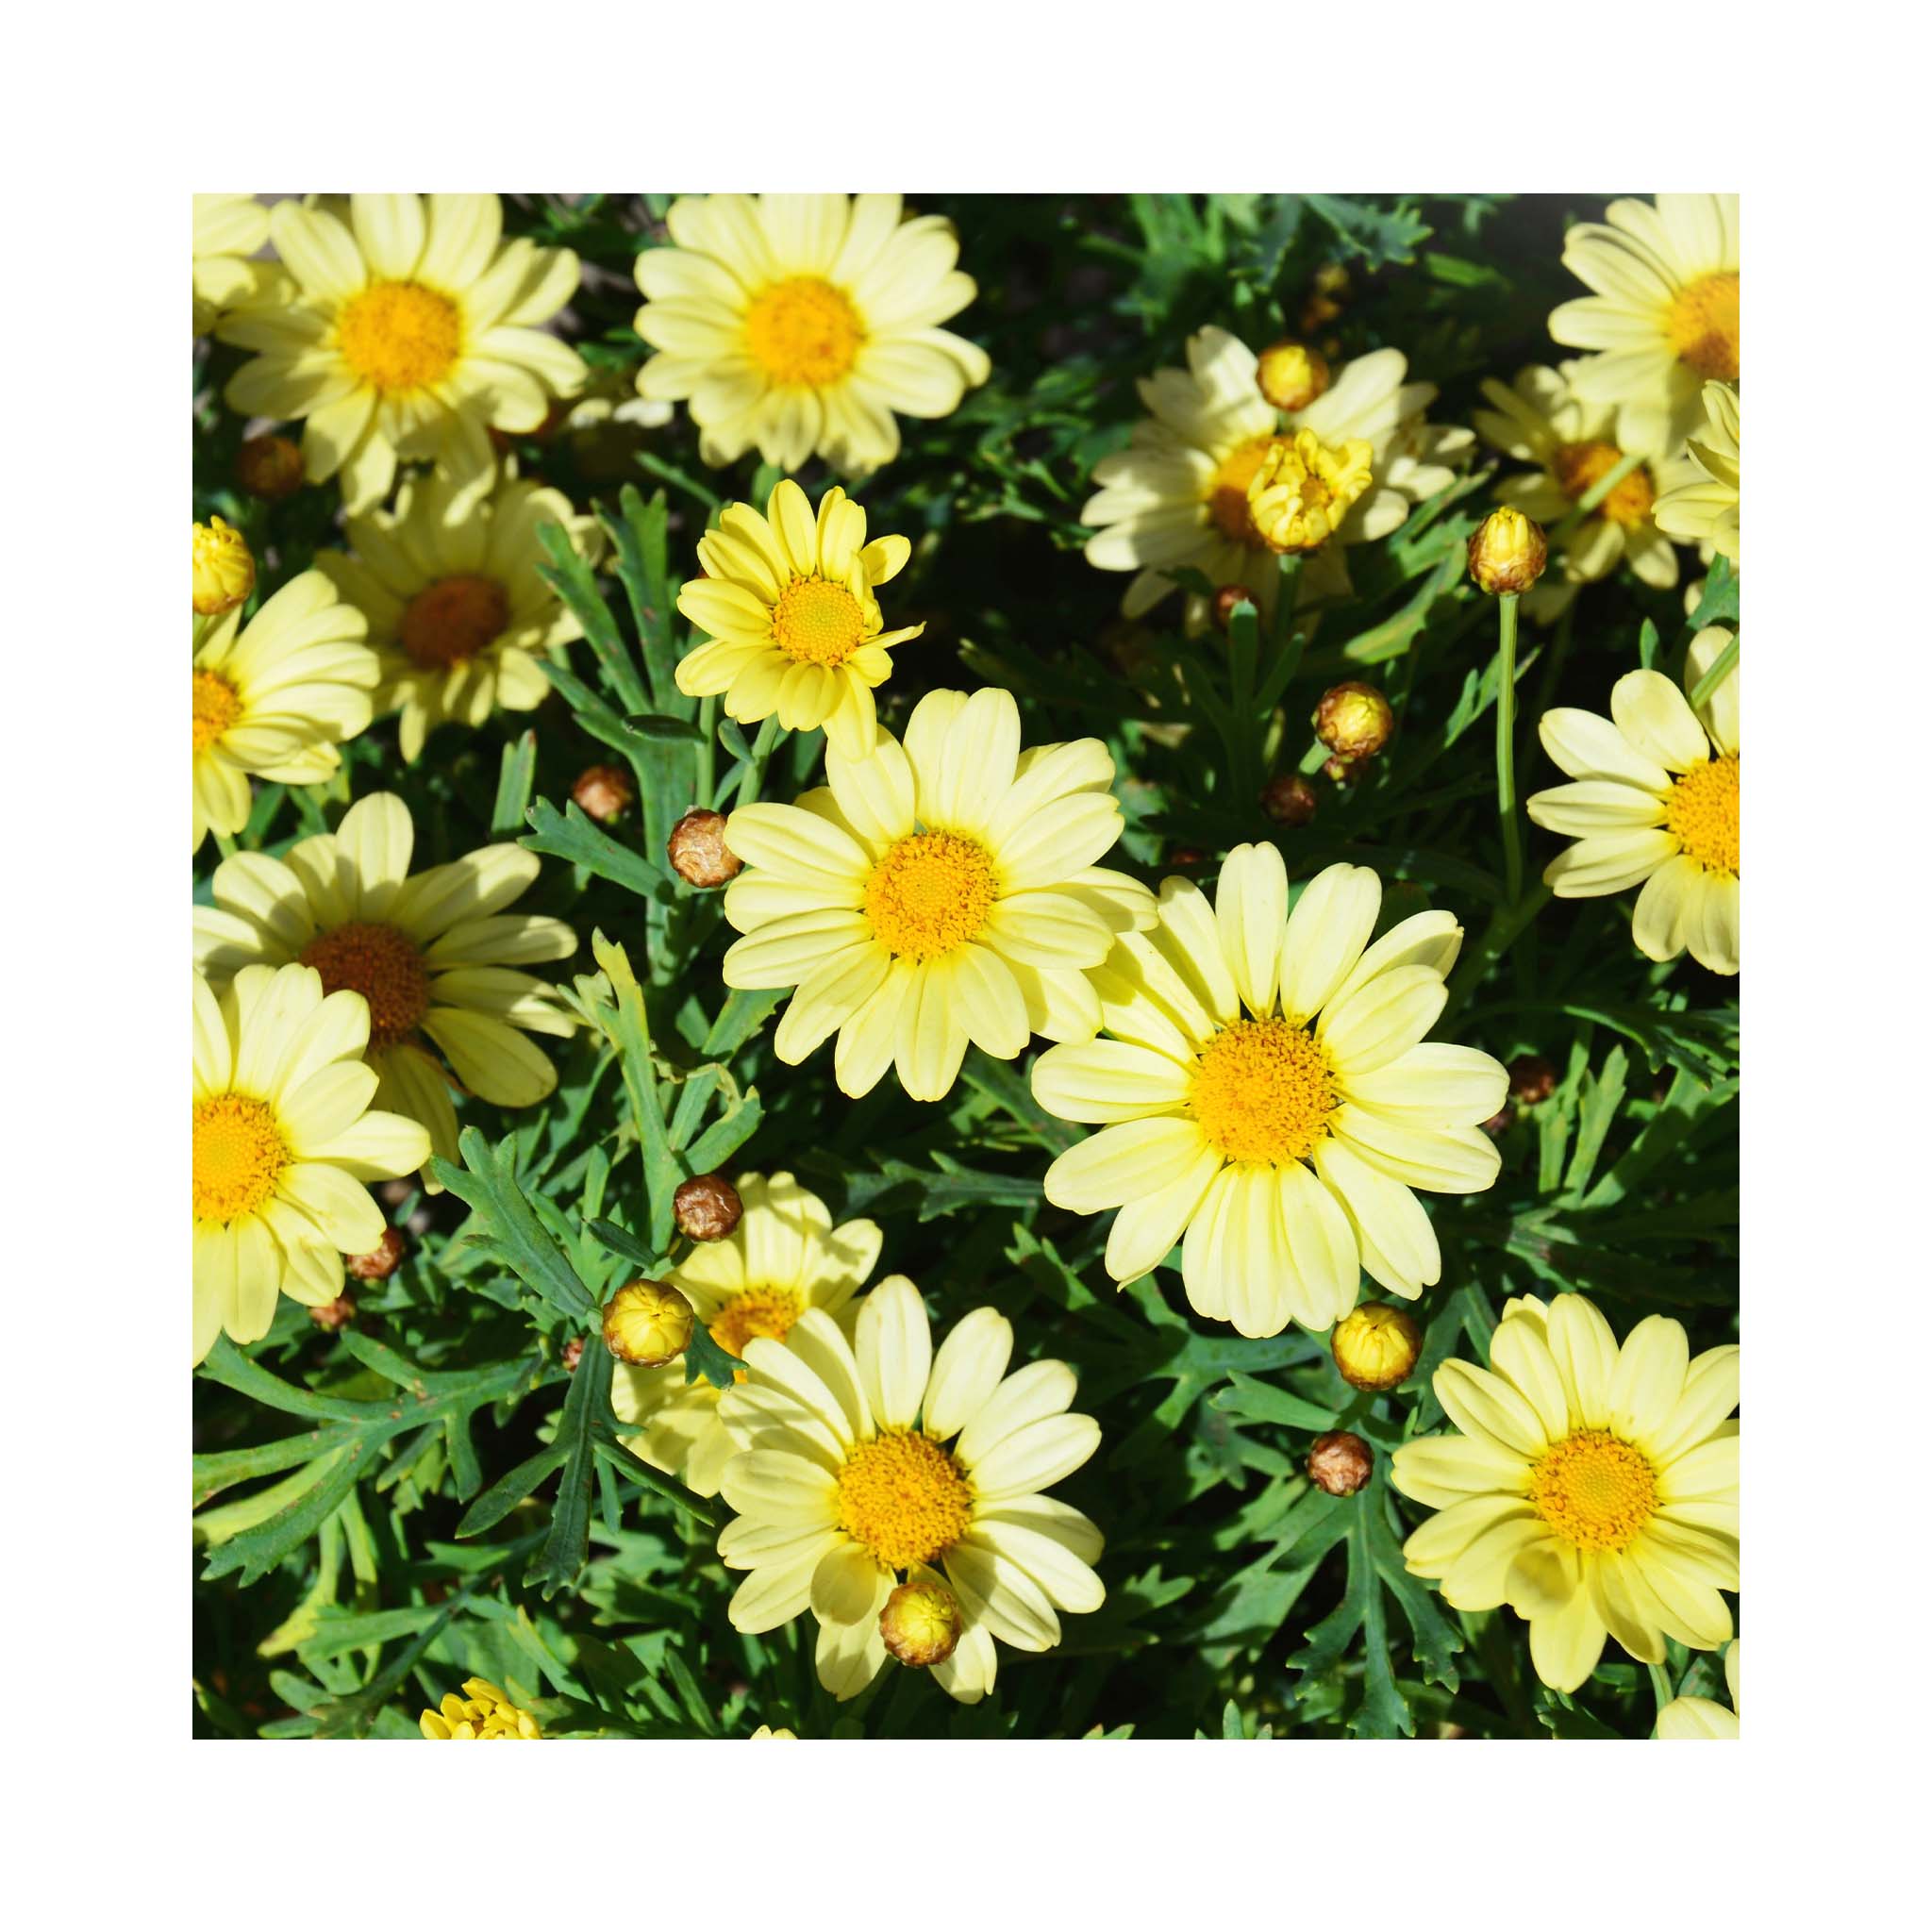 Argyranthemum Day-Zee collection of 6 starter plants